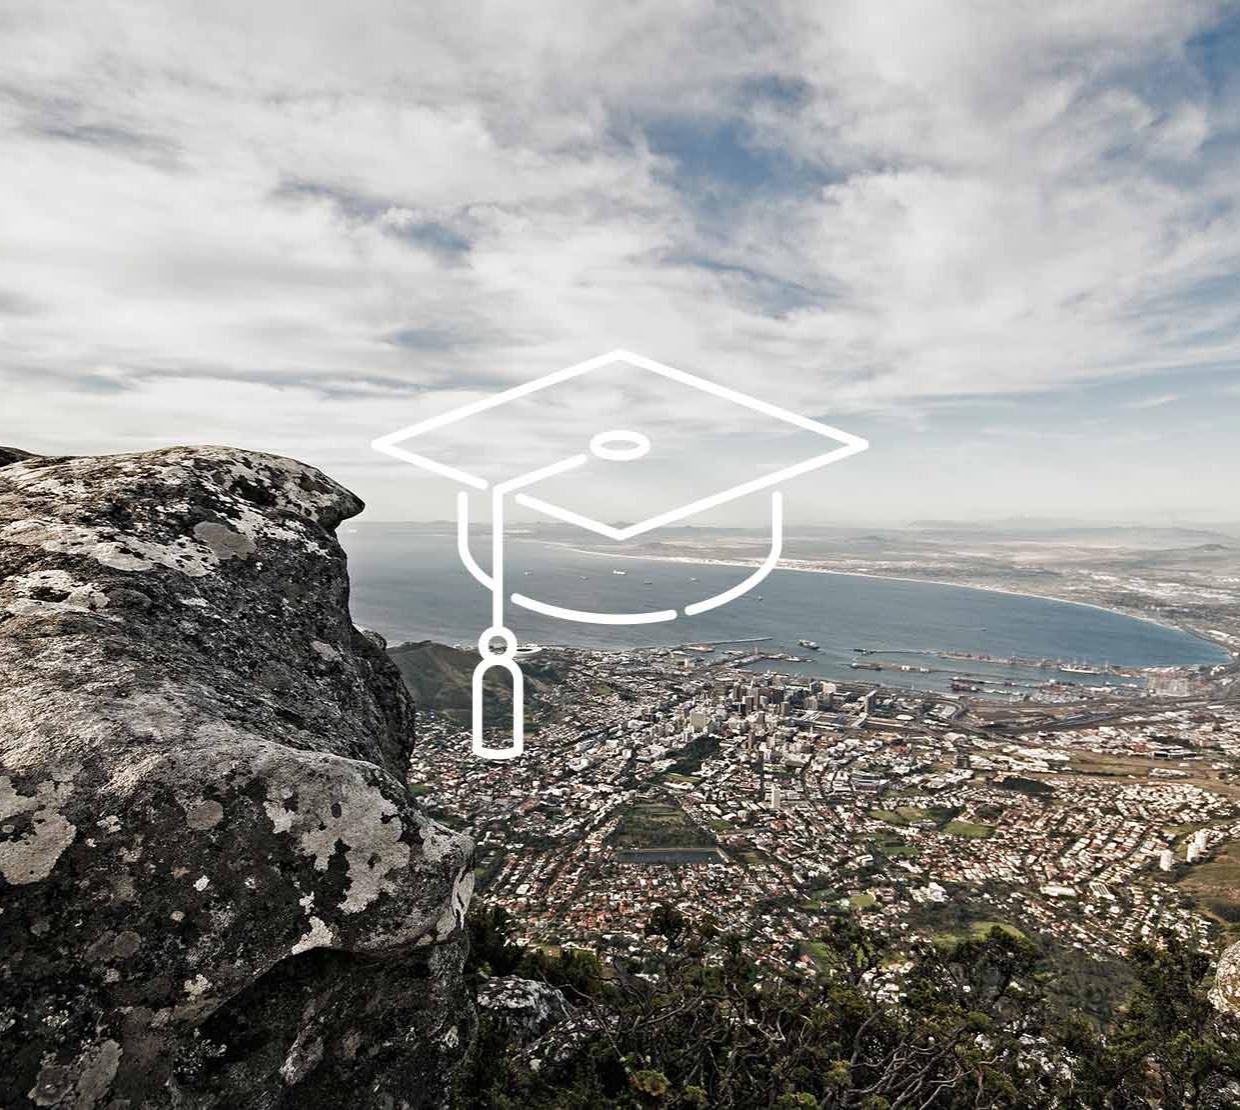 Graduation cap icon above South Africa coastal city